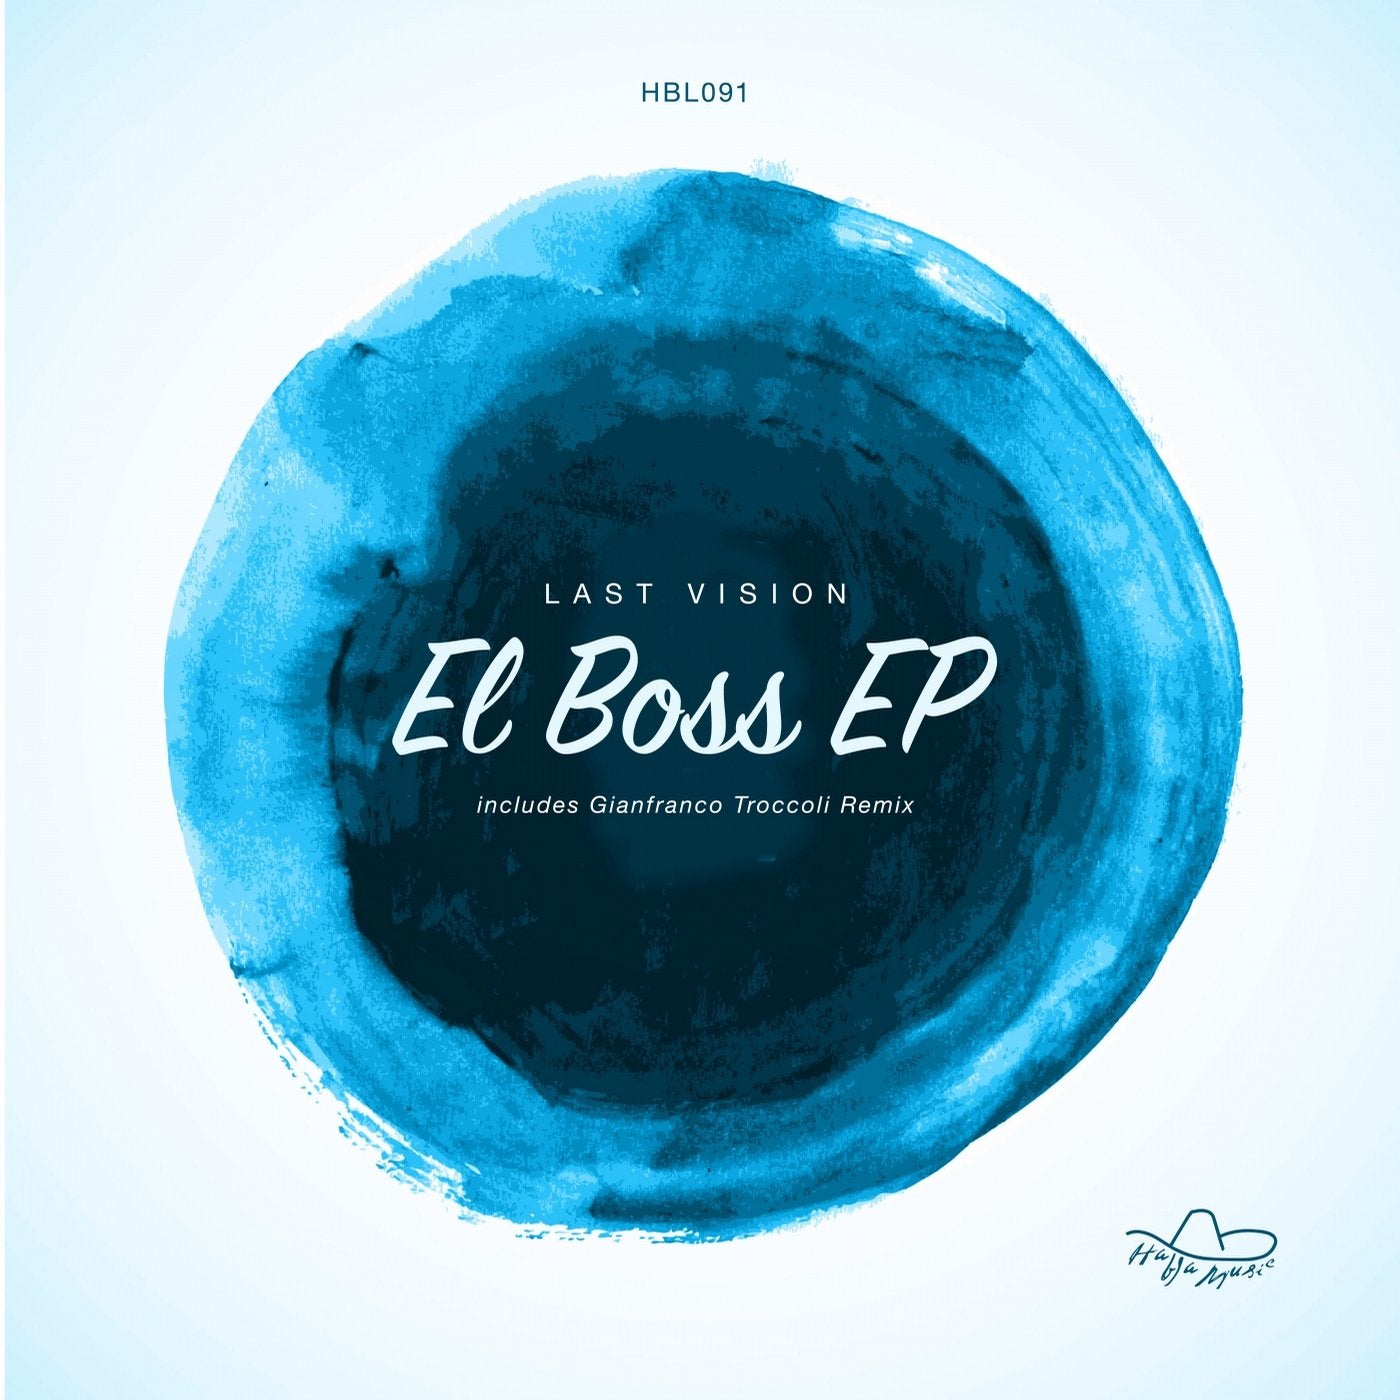 El Boss EP